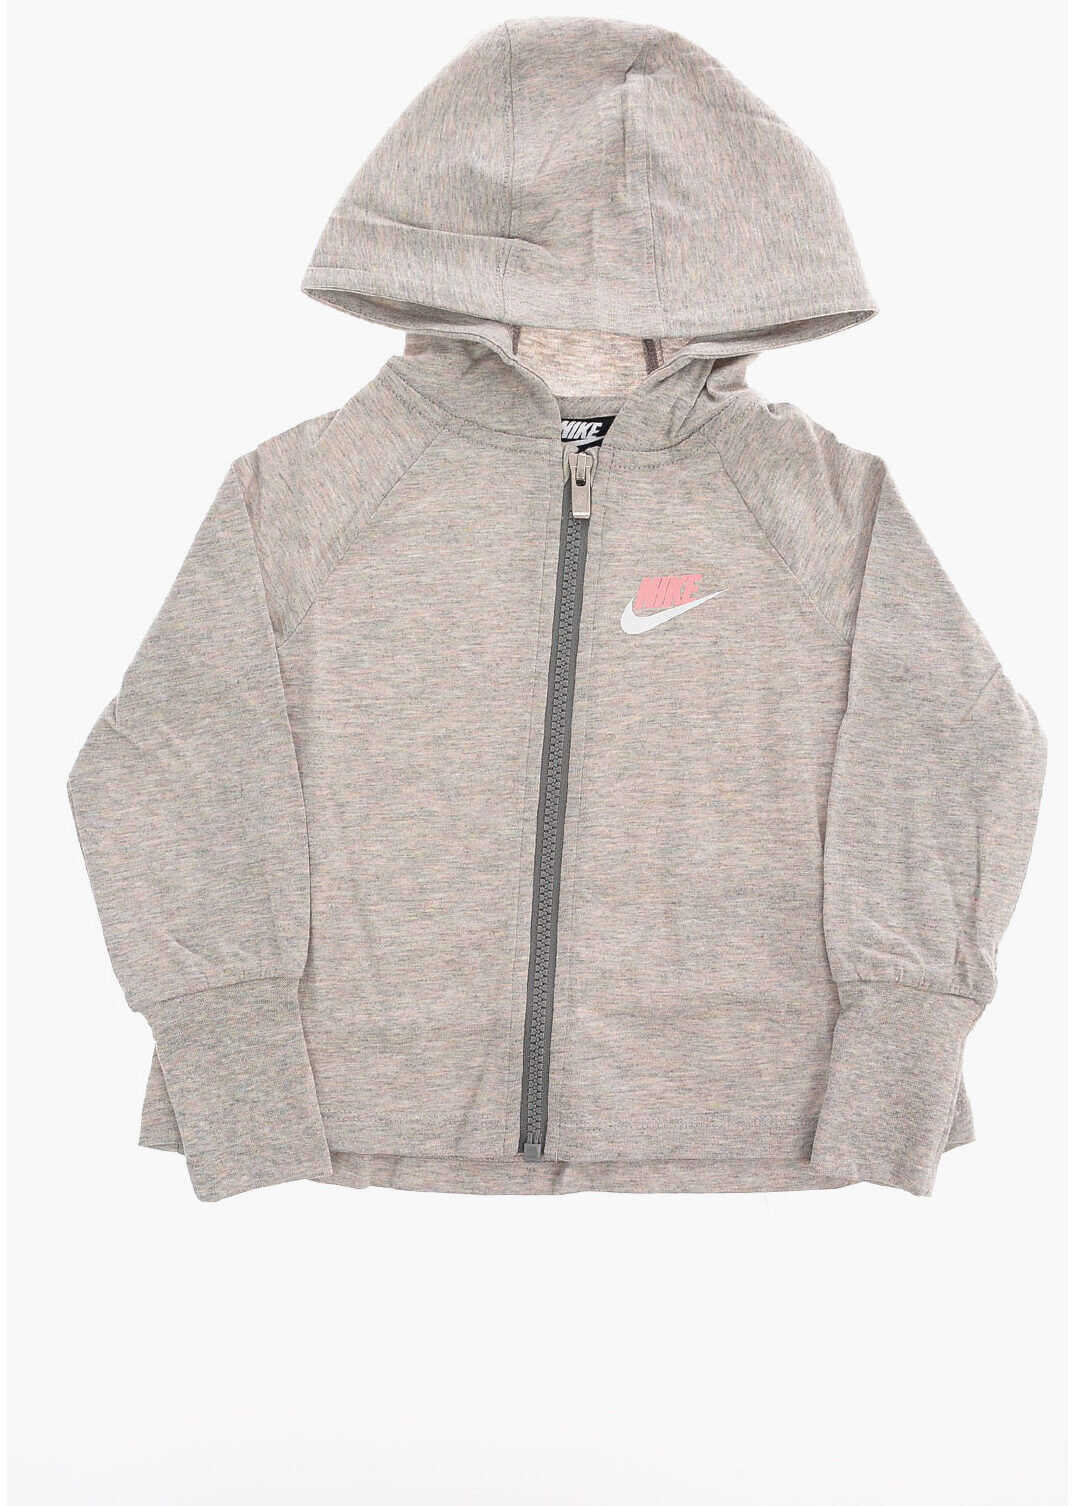 Nike Zipped Sweatshirt Gray